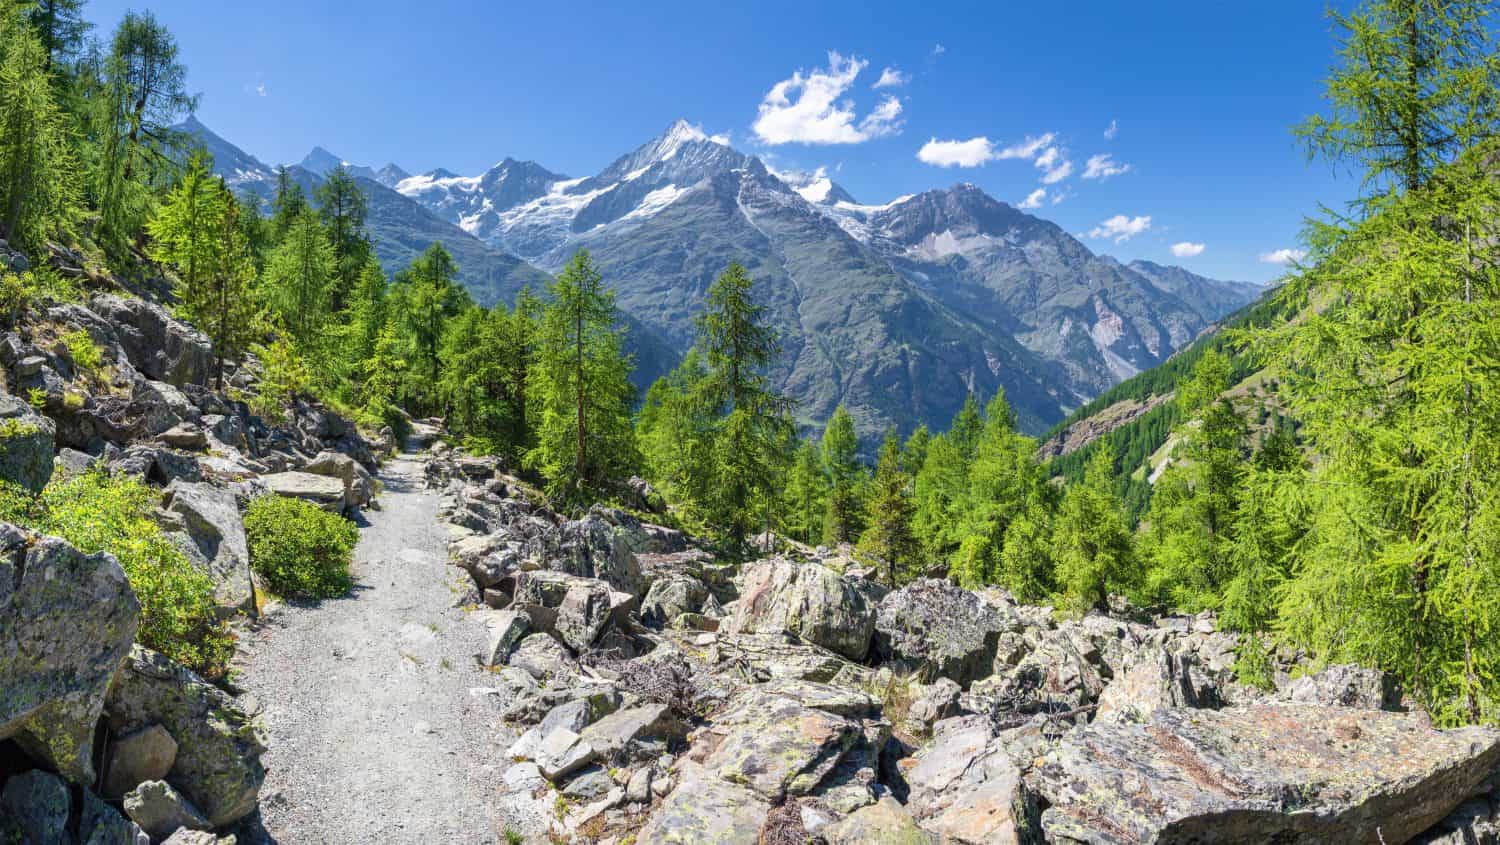 Le cime delle Alpi Vallesi: Bishorn, Weisshorn, Schalihorn e Rothorn sopra la valle Mattertal